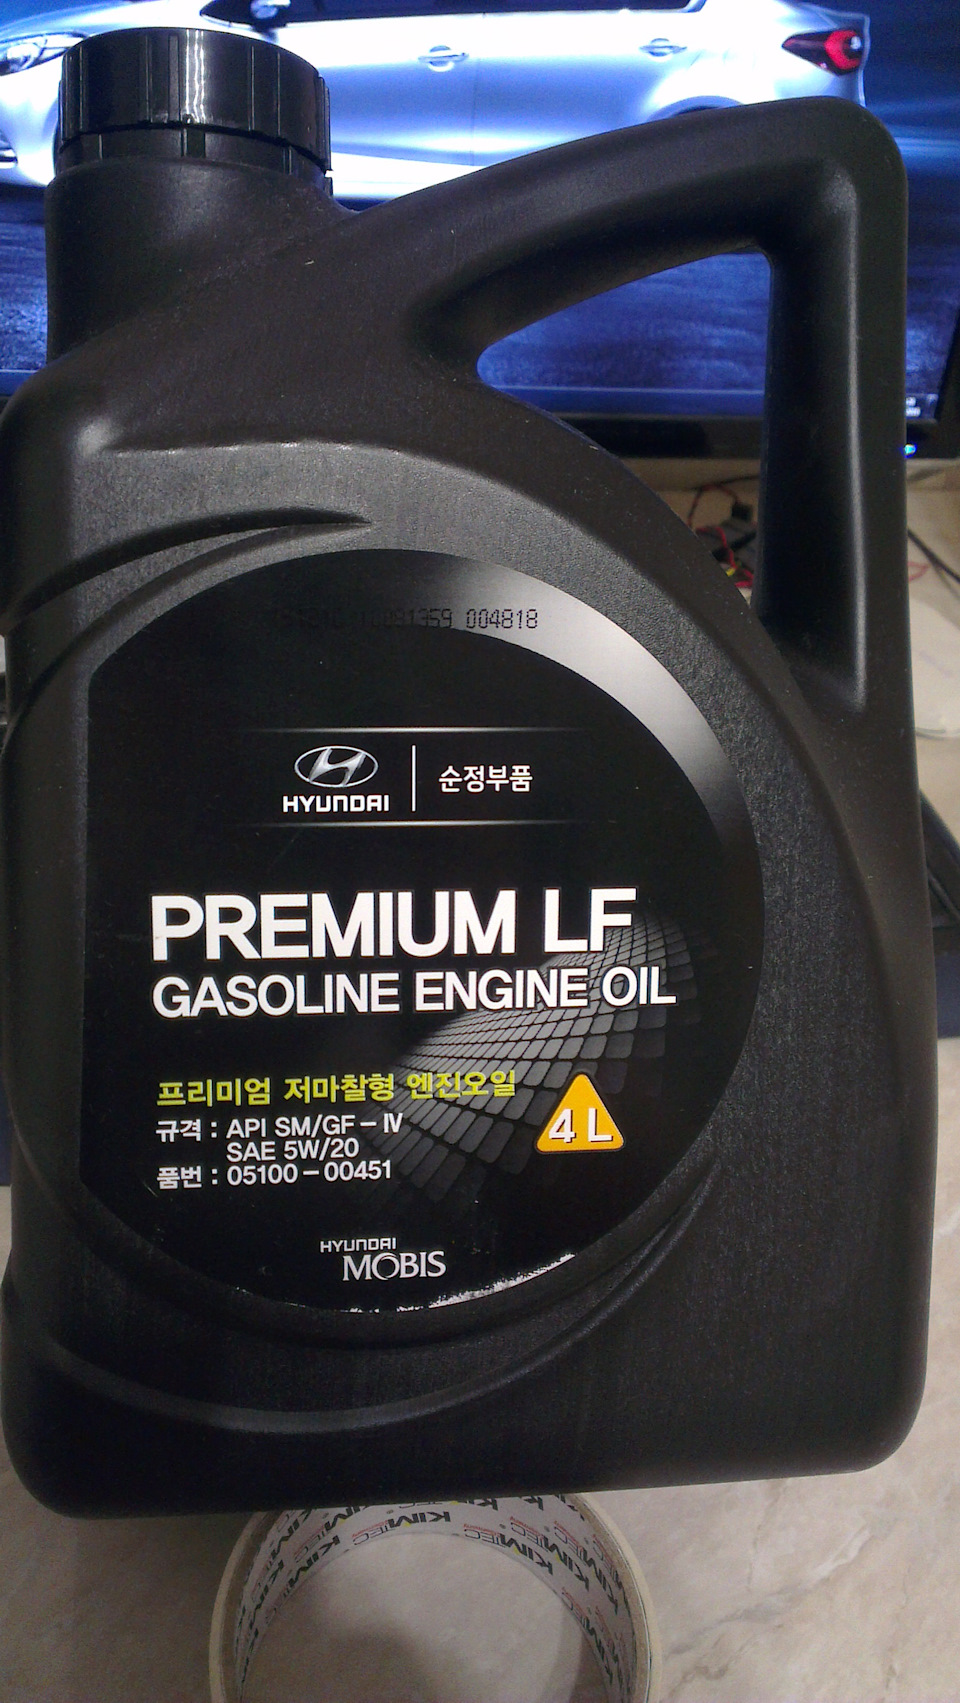 Kia Premium LF gasoline. Kia Premium LF gasoline 5w-20 новая канистра 2021. Kia 5w20 LF. Premium gasoline engine Oil 5w20.